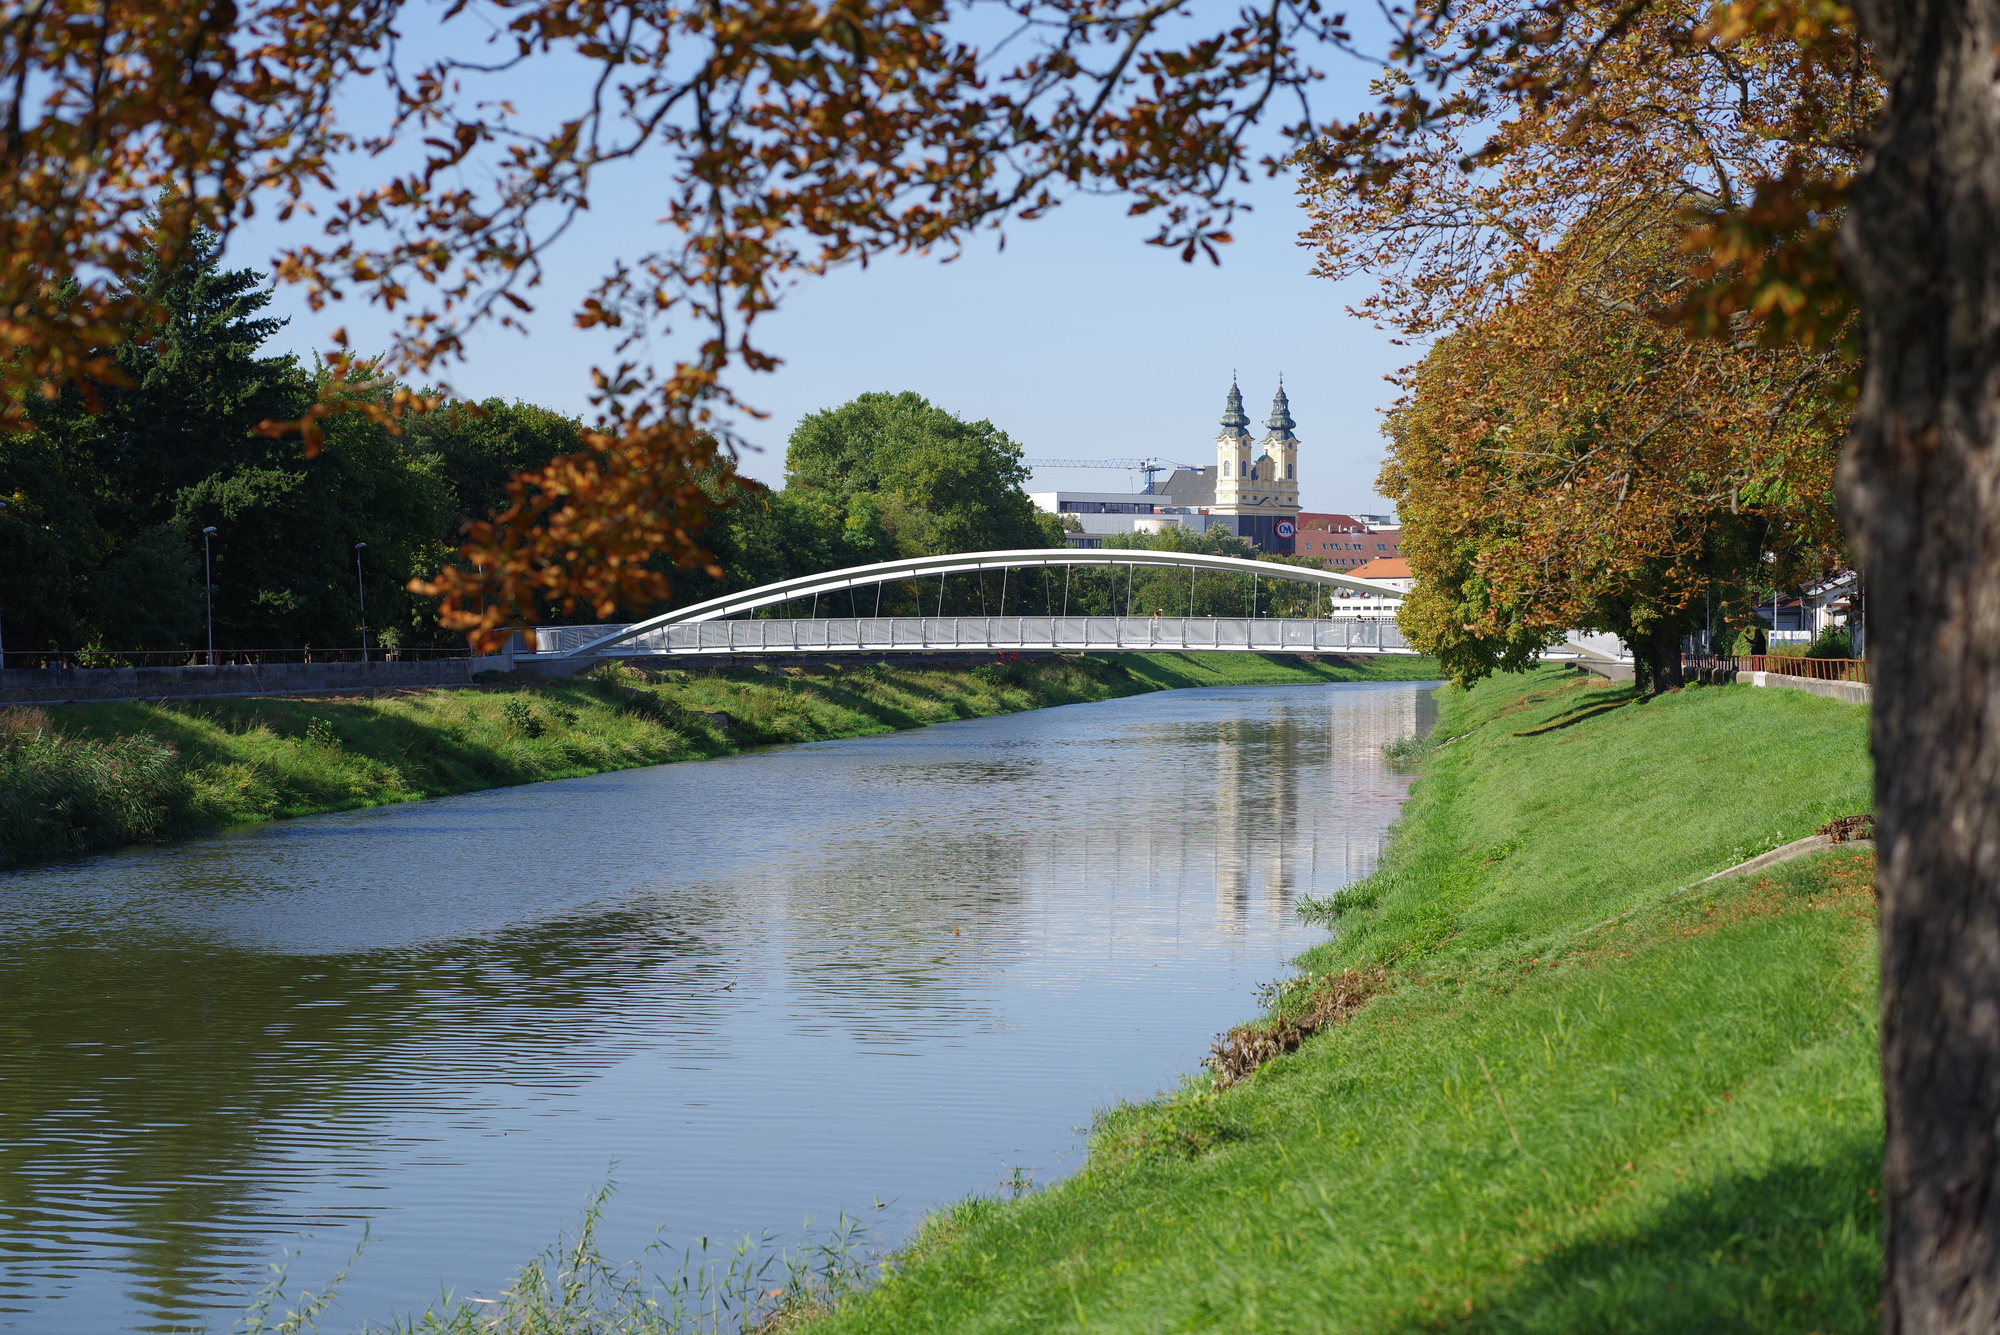  Kalvarsky Most - 横跨尼特拉河的自行车桥丨Kalvarsky Most - Cyclist Bridge across the River Nitra-1